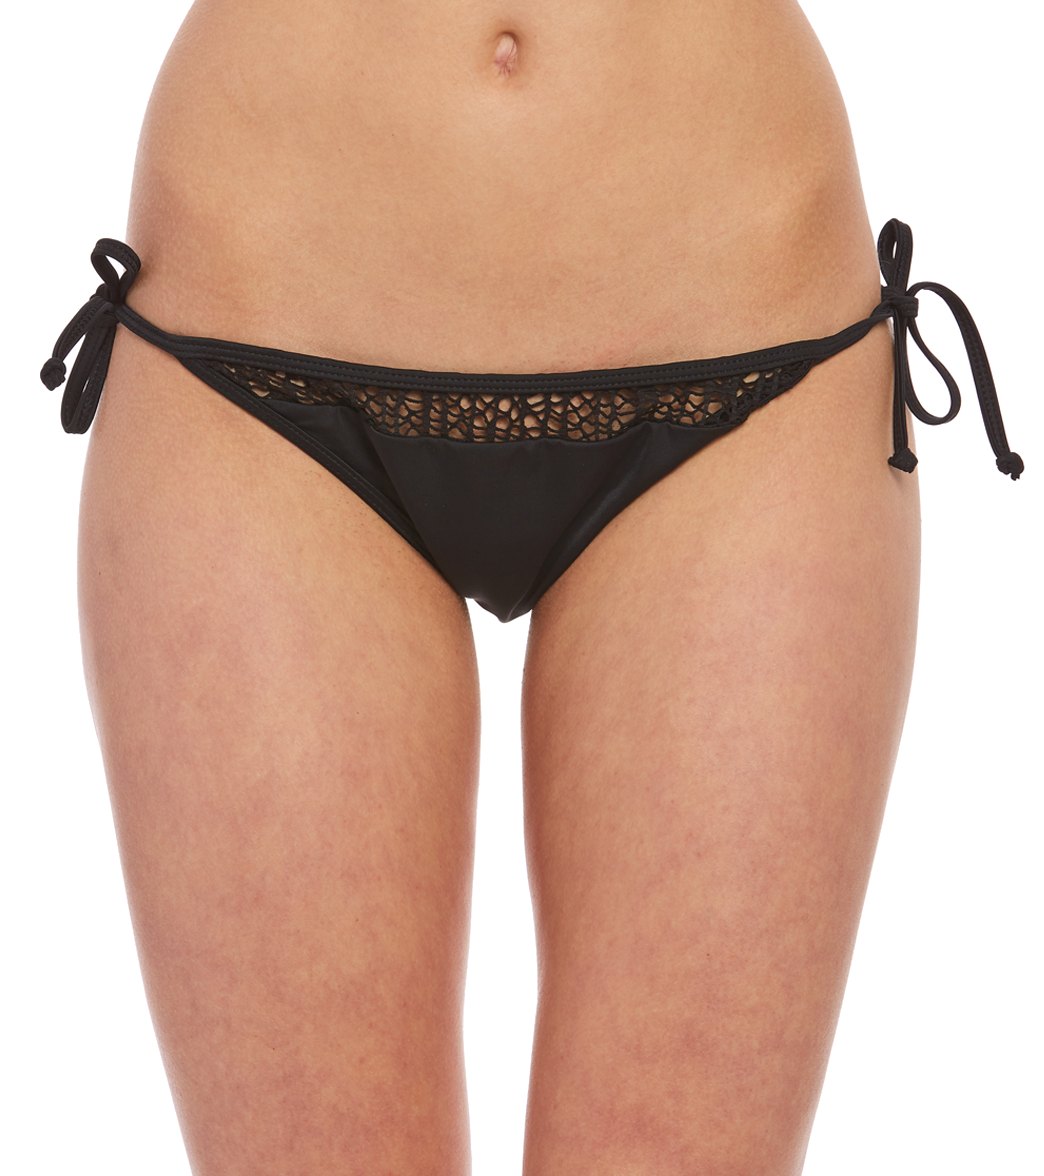 Reef Swimwear Latigo Tie Side Bikini Bottom - Black Large - Swimoutlet.com